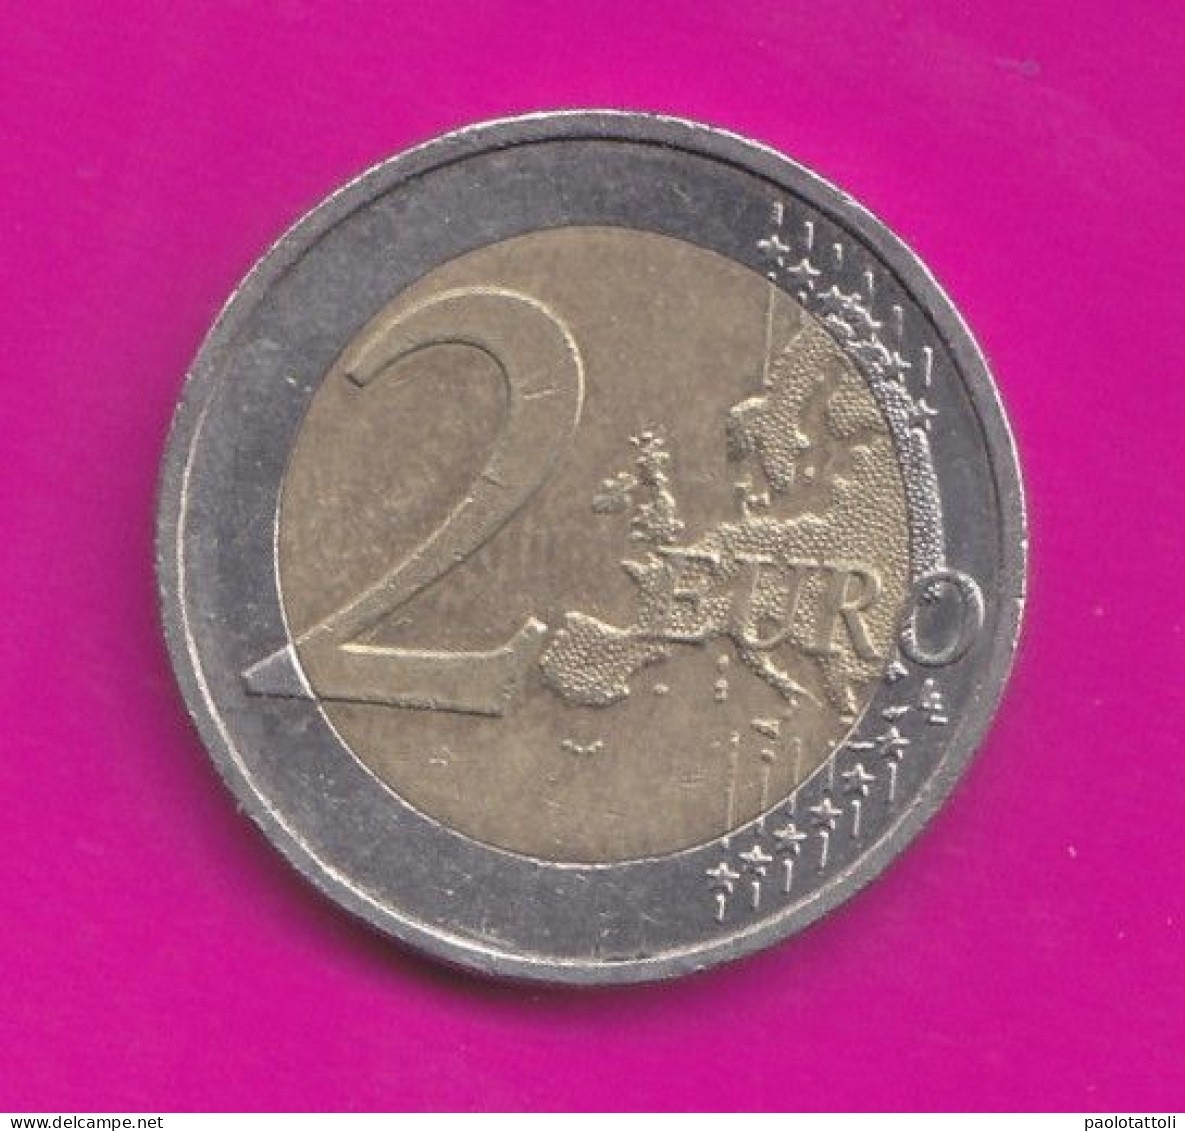 Germany, 2022-Mint Munich (D)- 2 Euro Commemorative- Obverse  Thurningen. Reverse Map Of Western Europe- - Duitsland